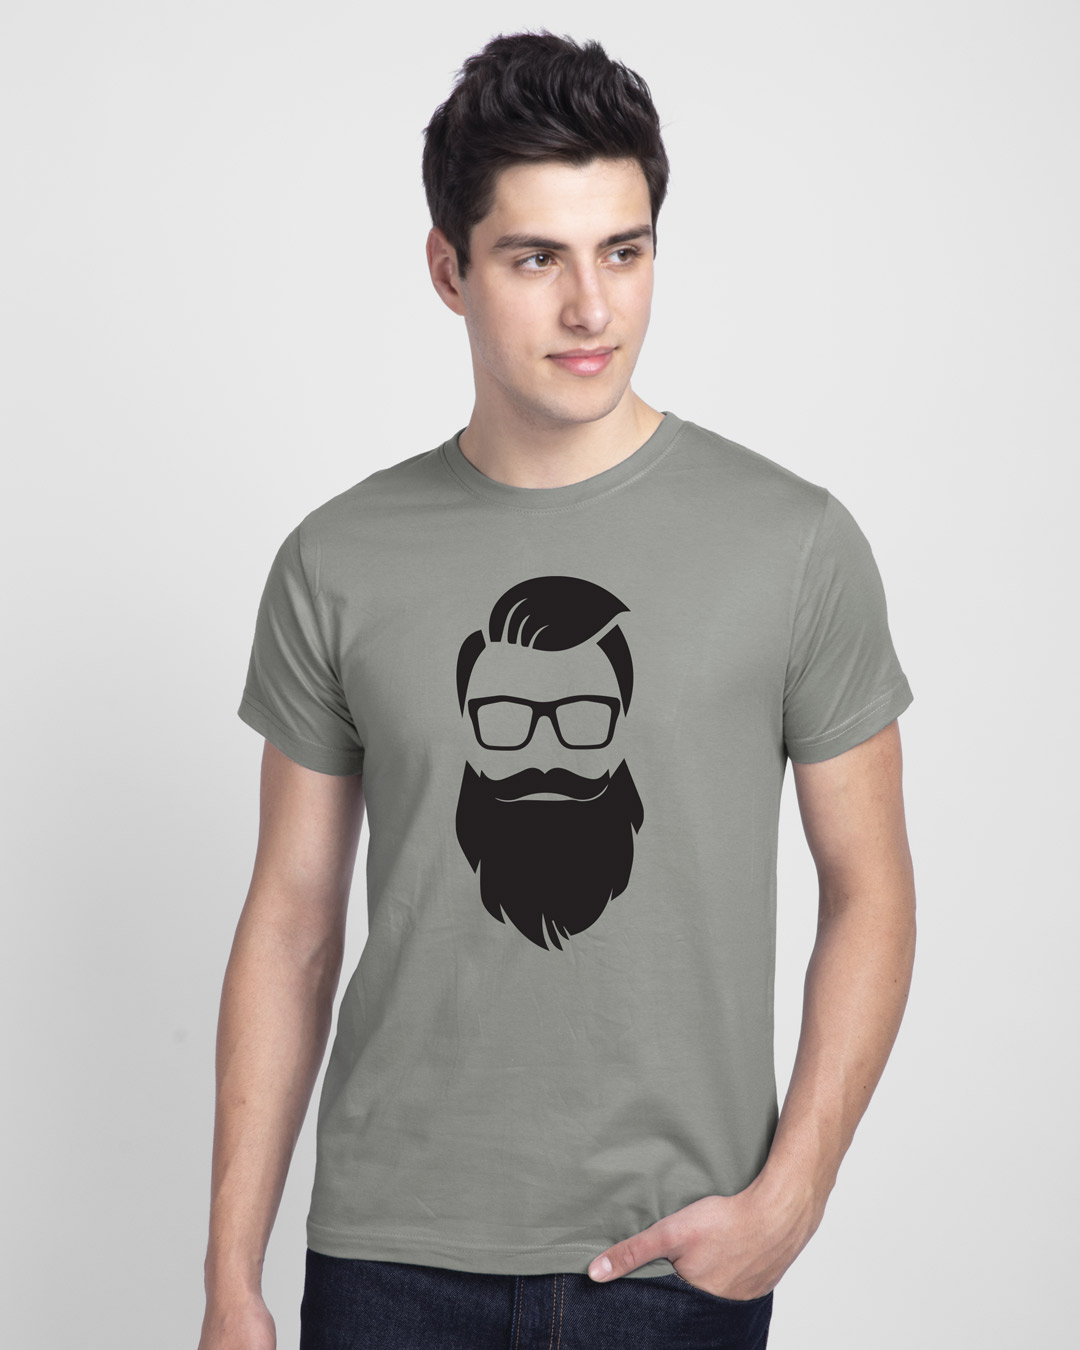 beardman shirts